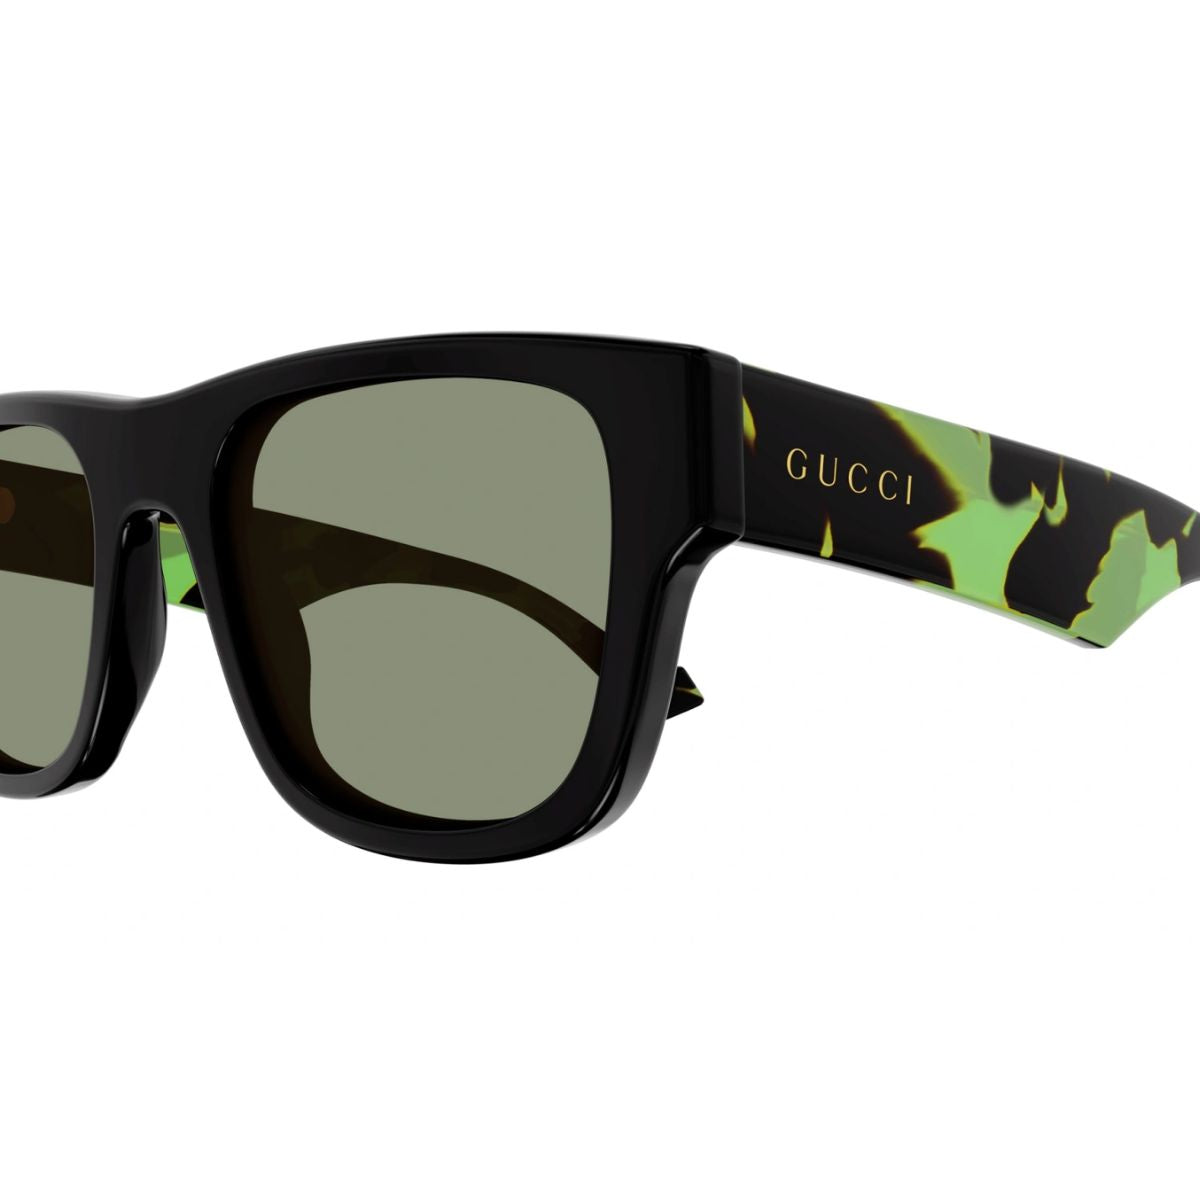 "Gucci GG1427S 005 Sunglasses - Optorium"